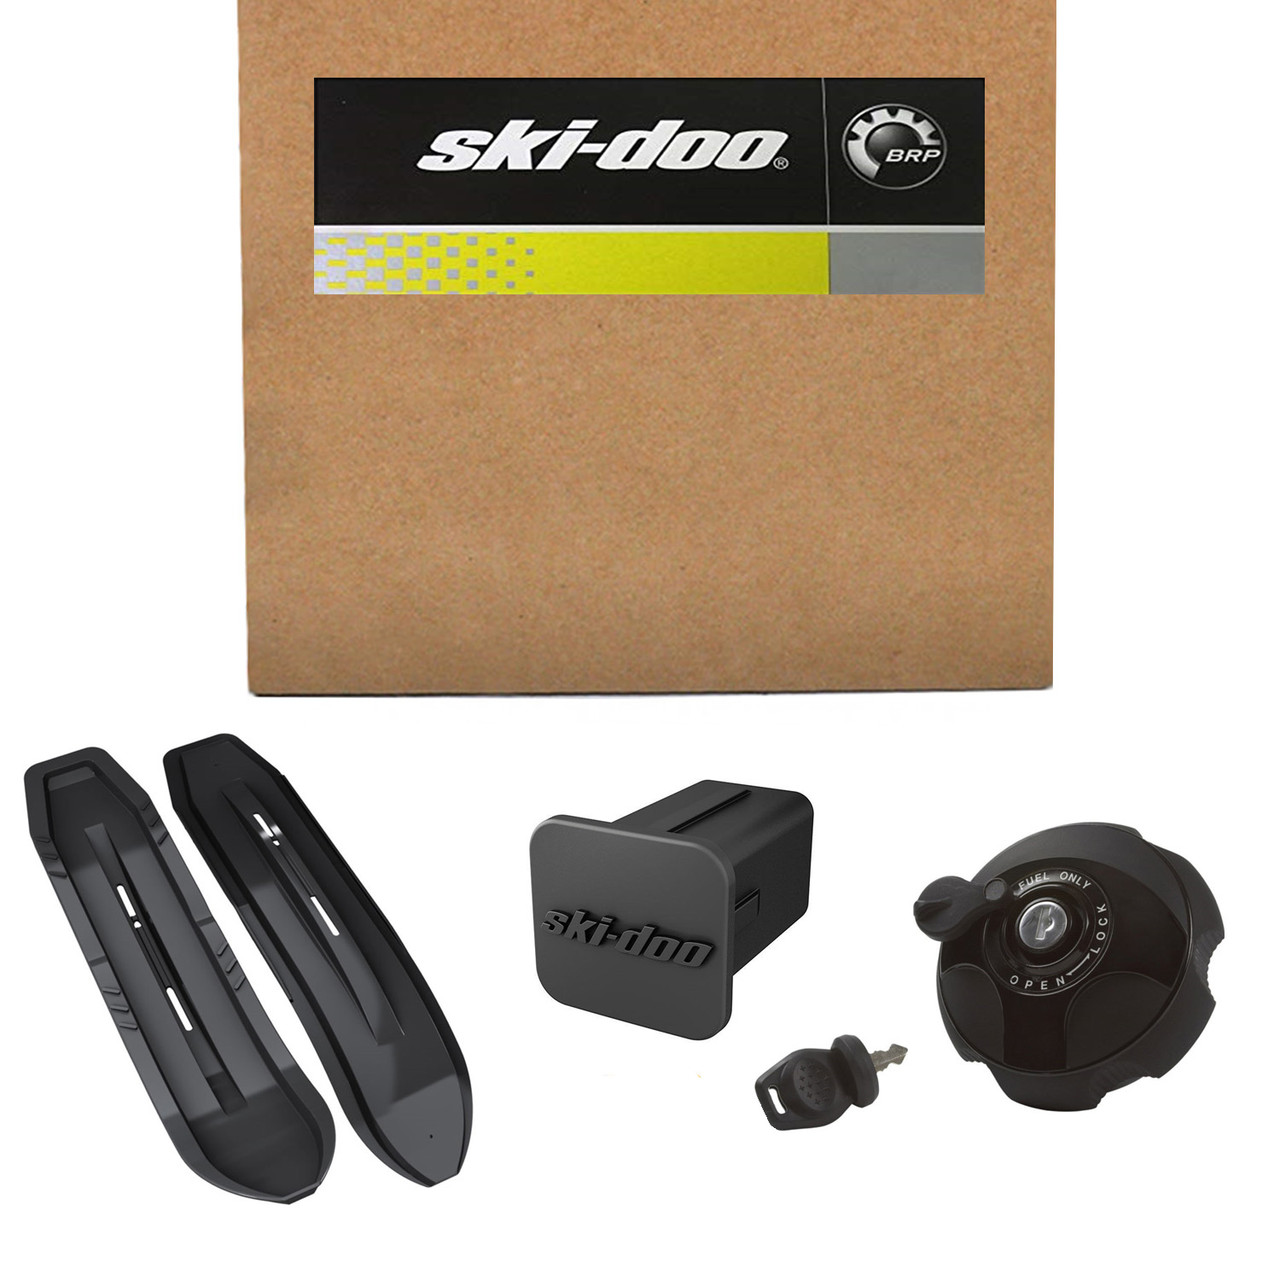 Ski-Doo New OEM Electronic Box, 420464409